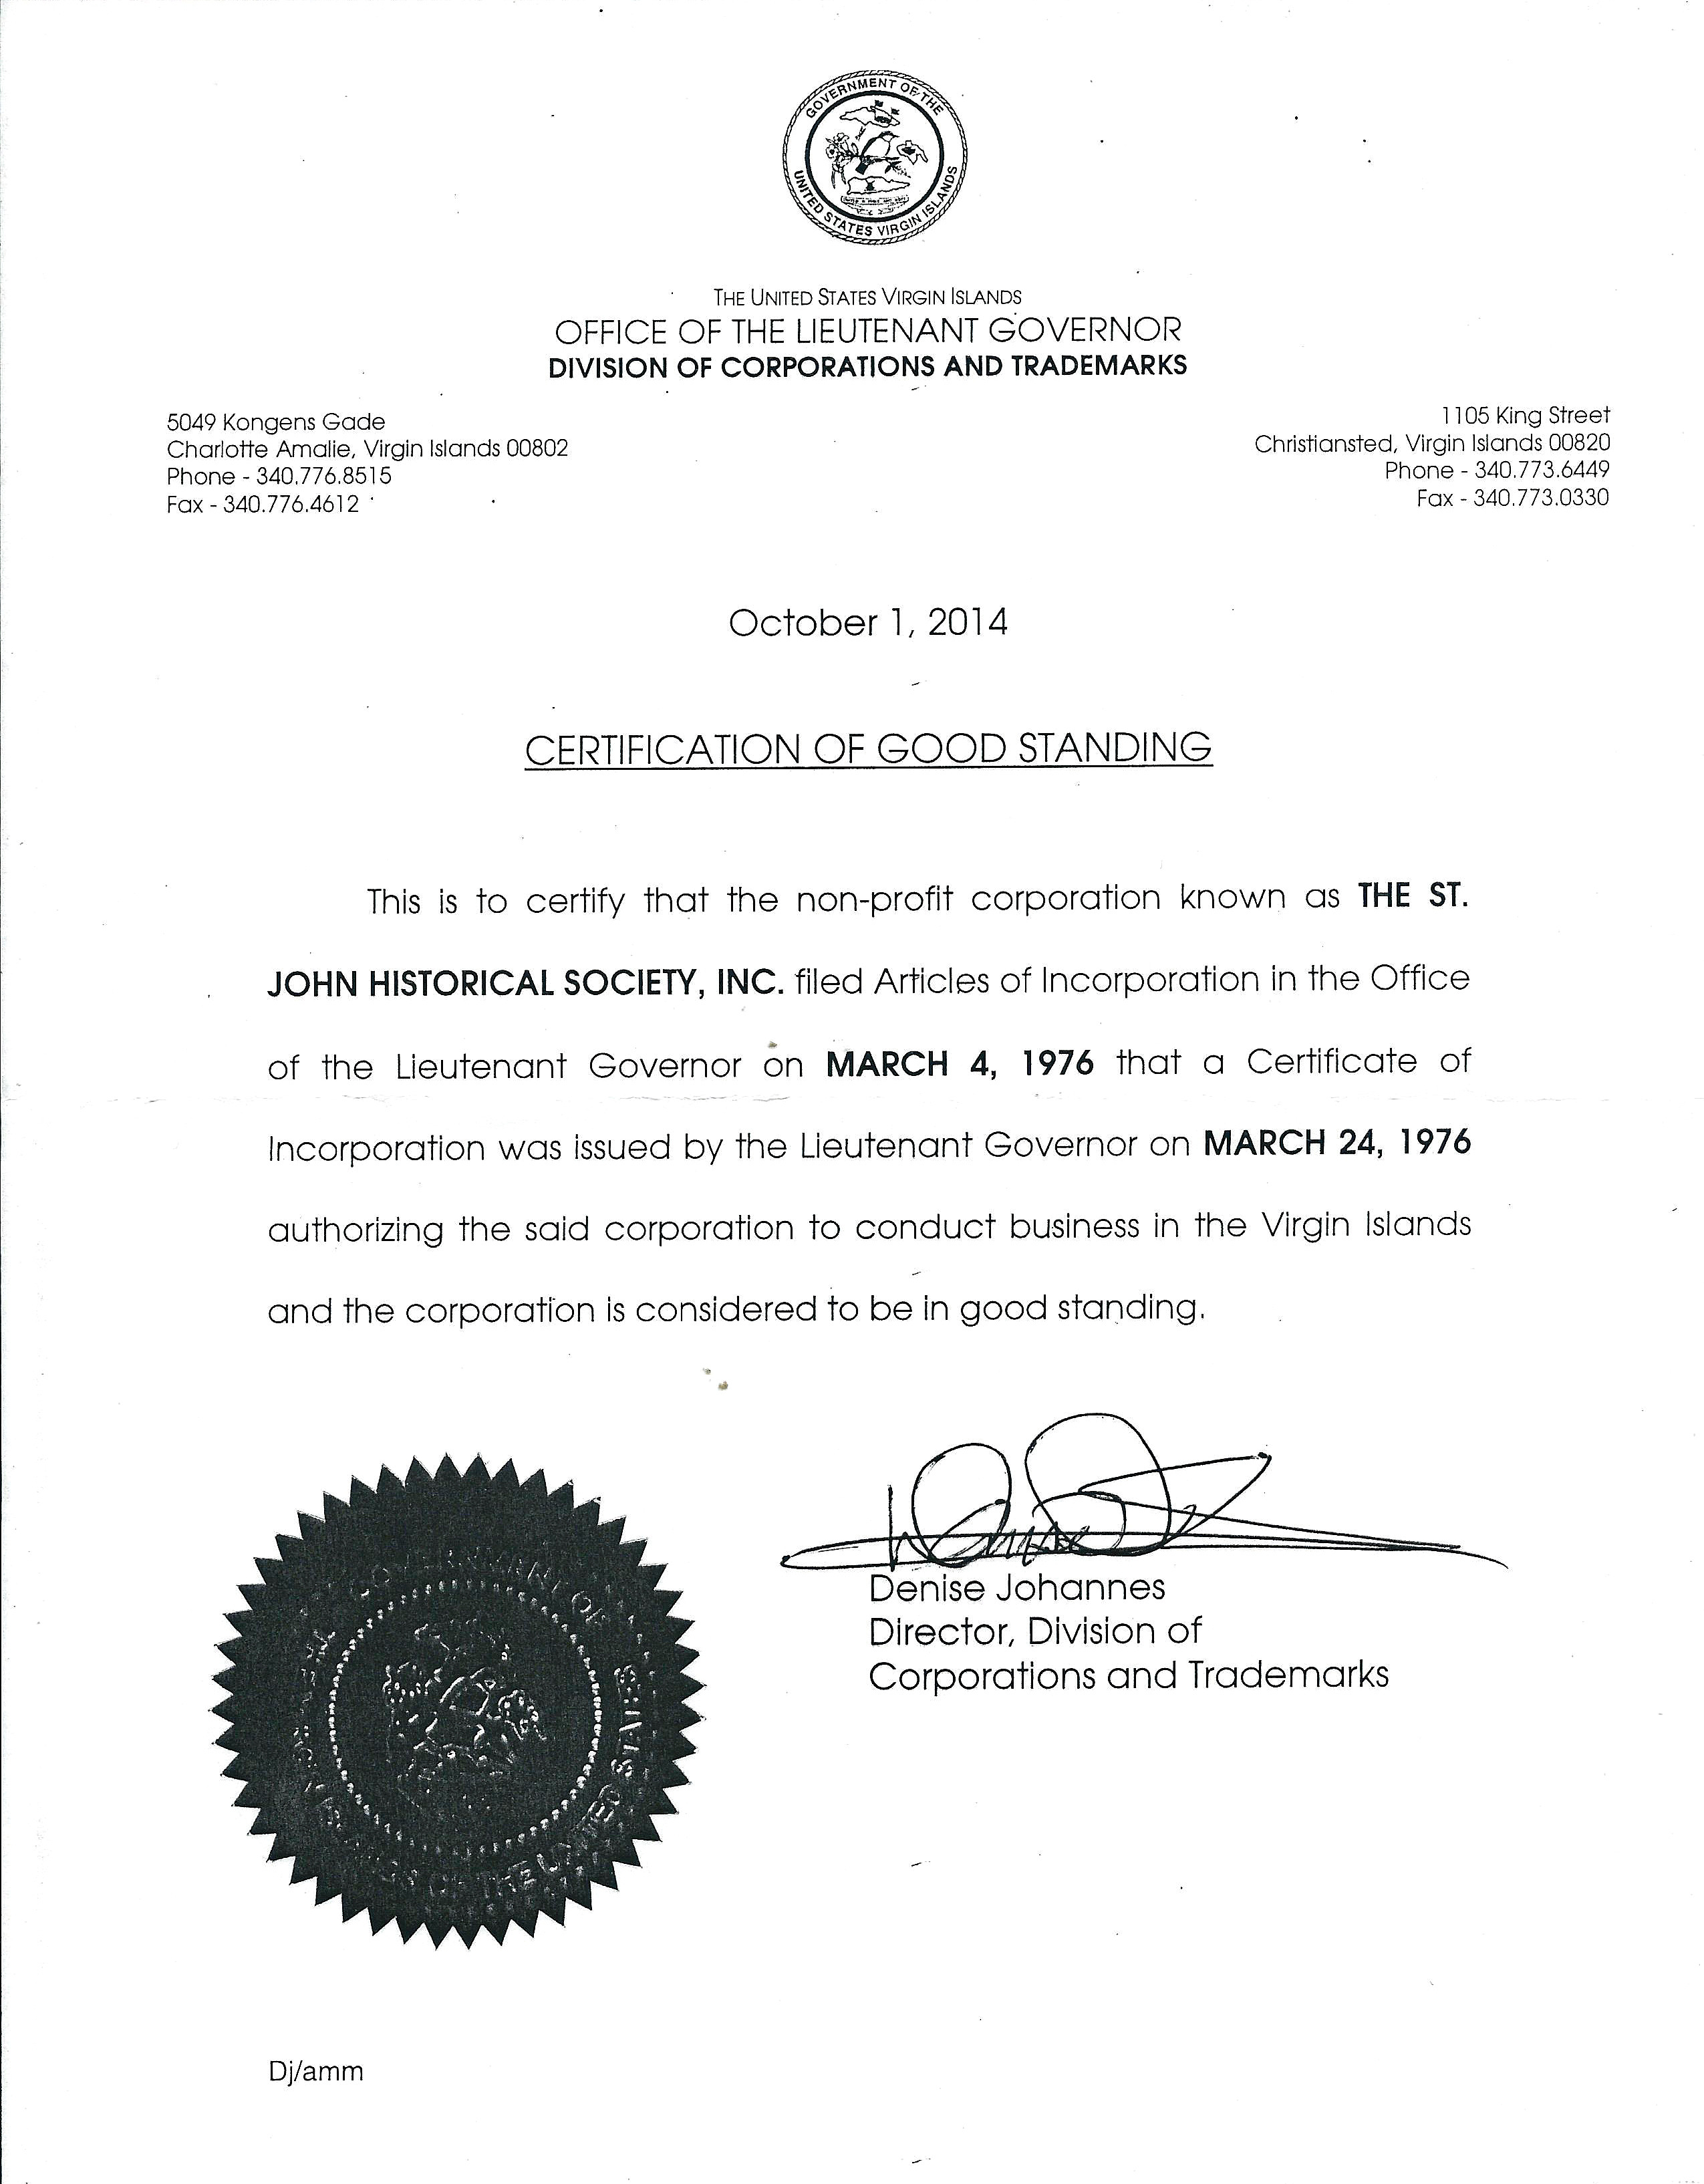 Certificate of Good Standing Oct 1 2014 St John Historical Society